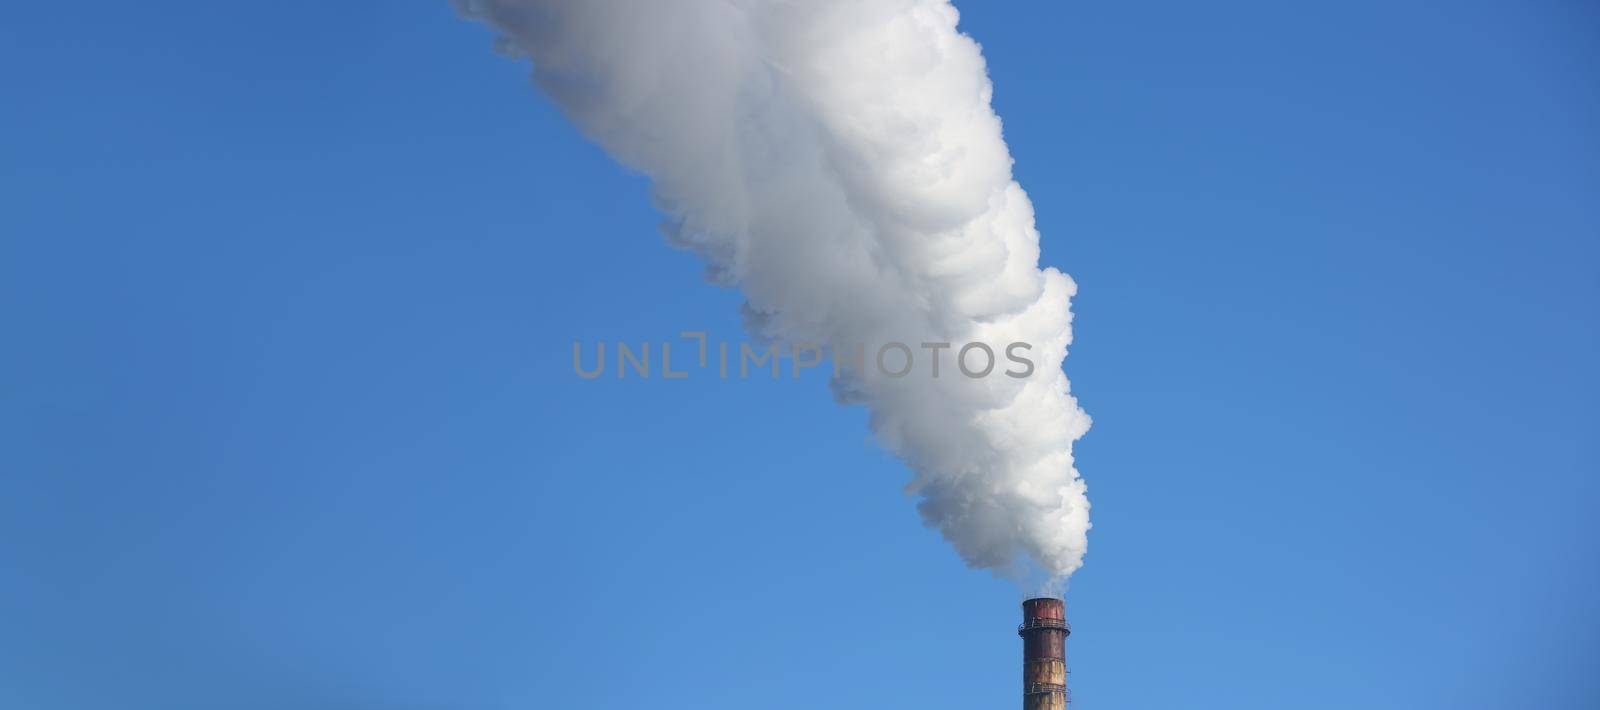 Chimney blows white smoke into blue sky by kuprevich